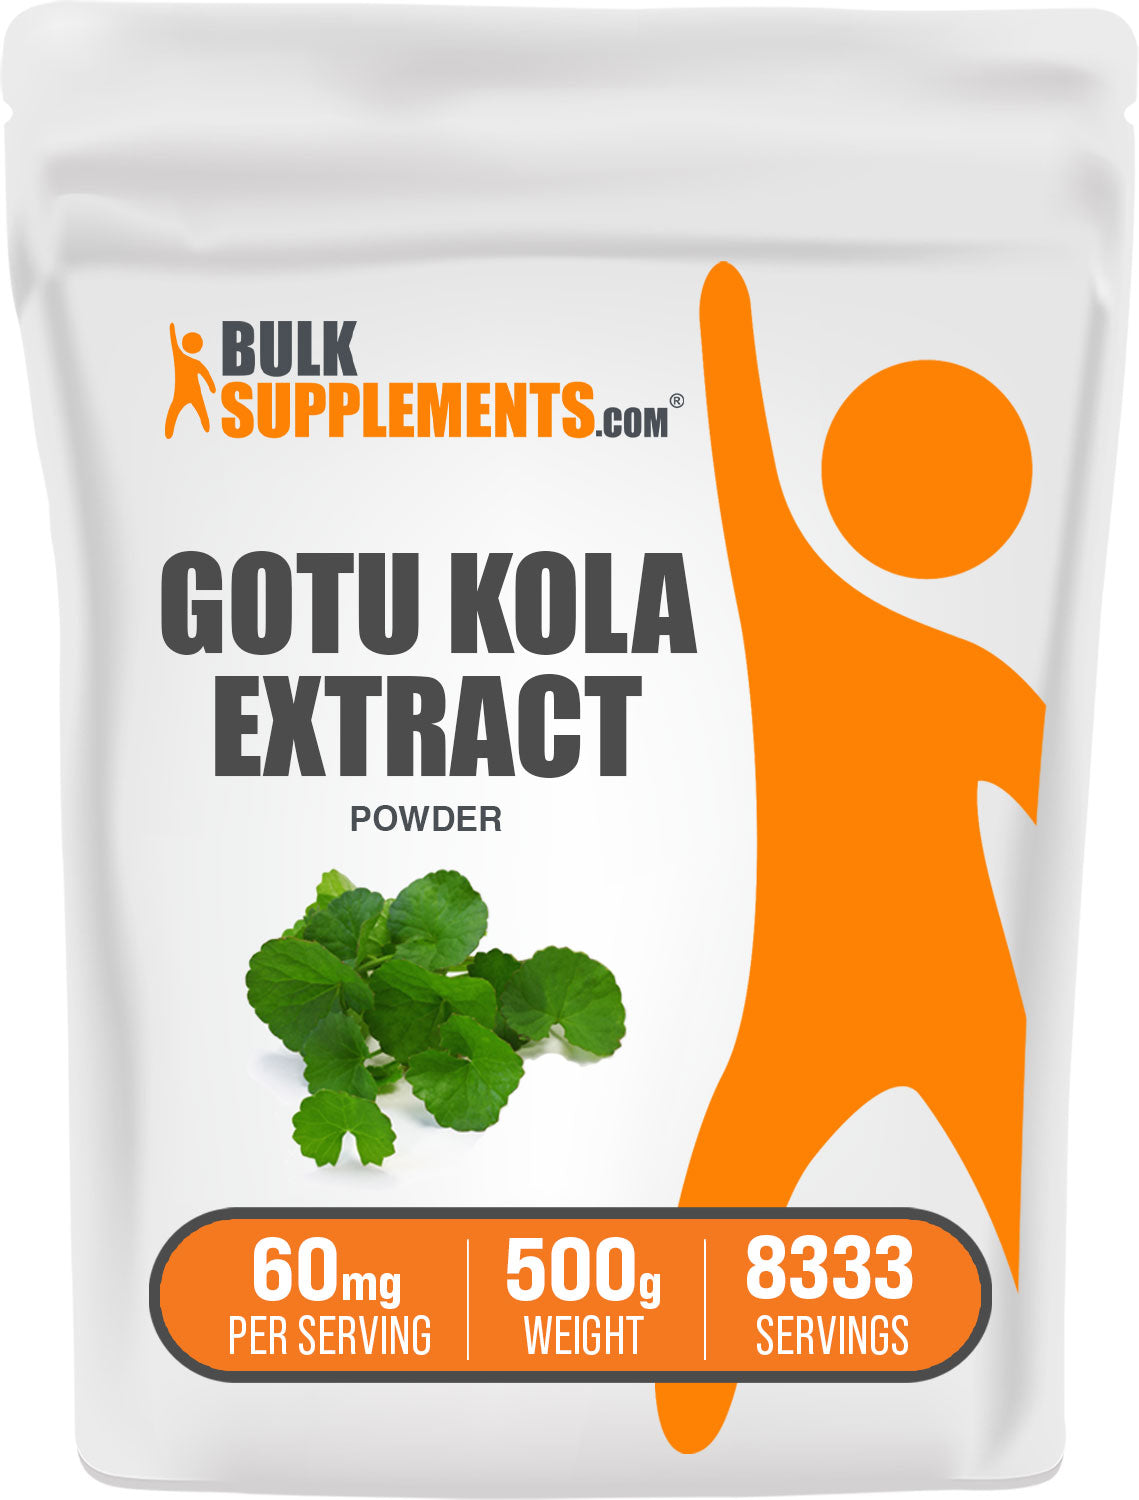 Gotu Kola Extract 500g